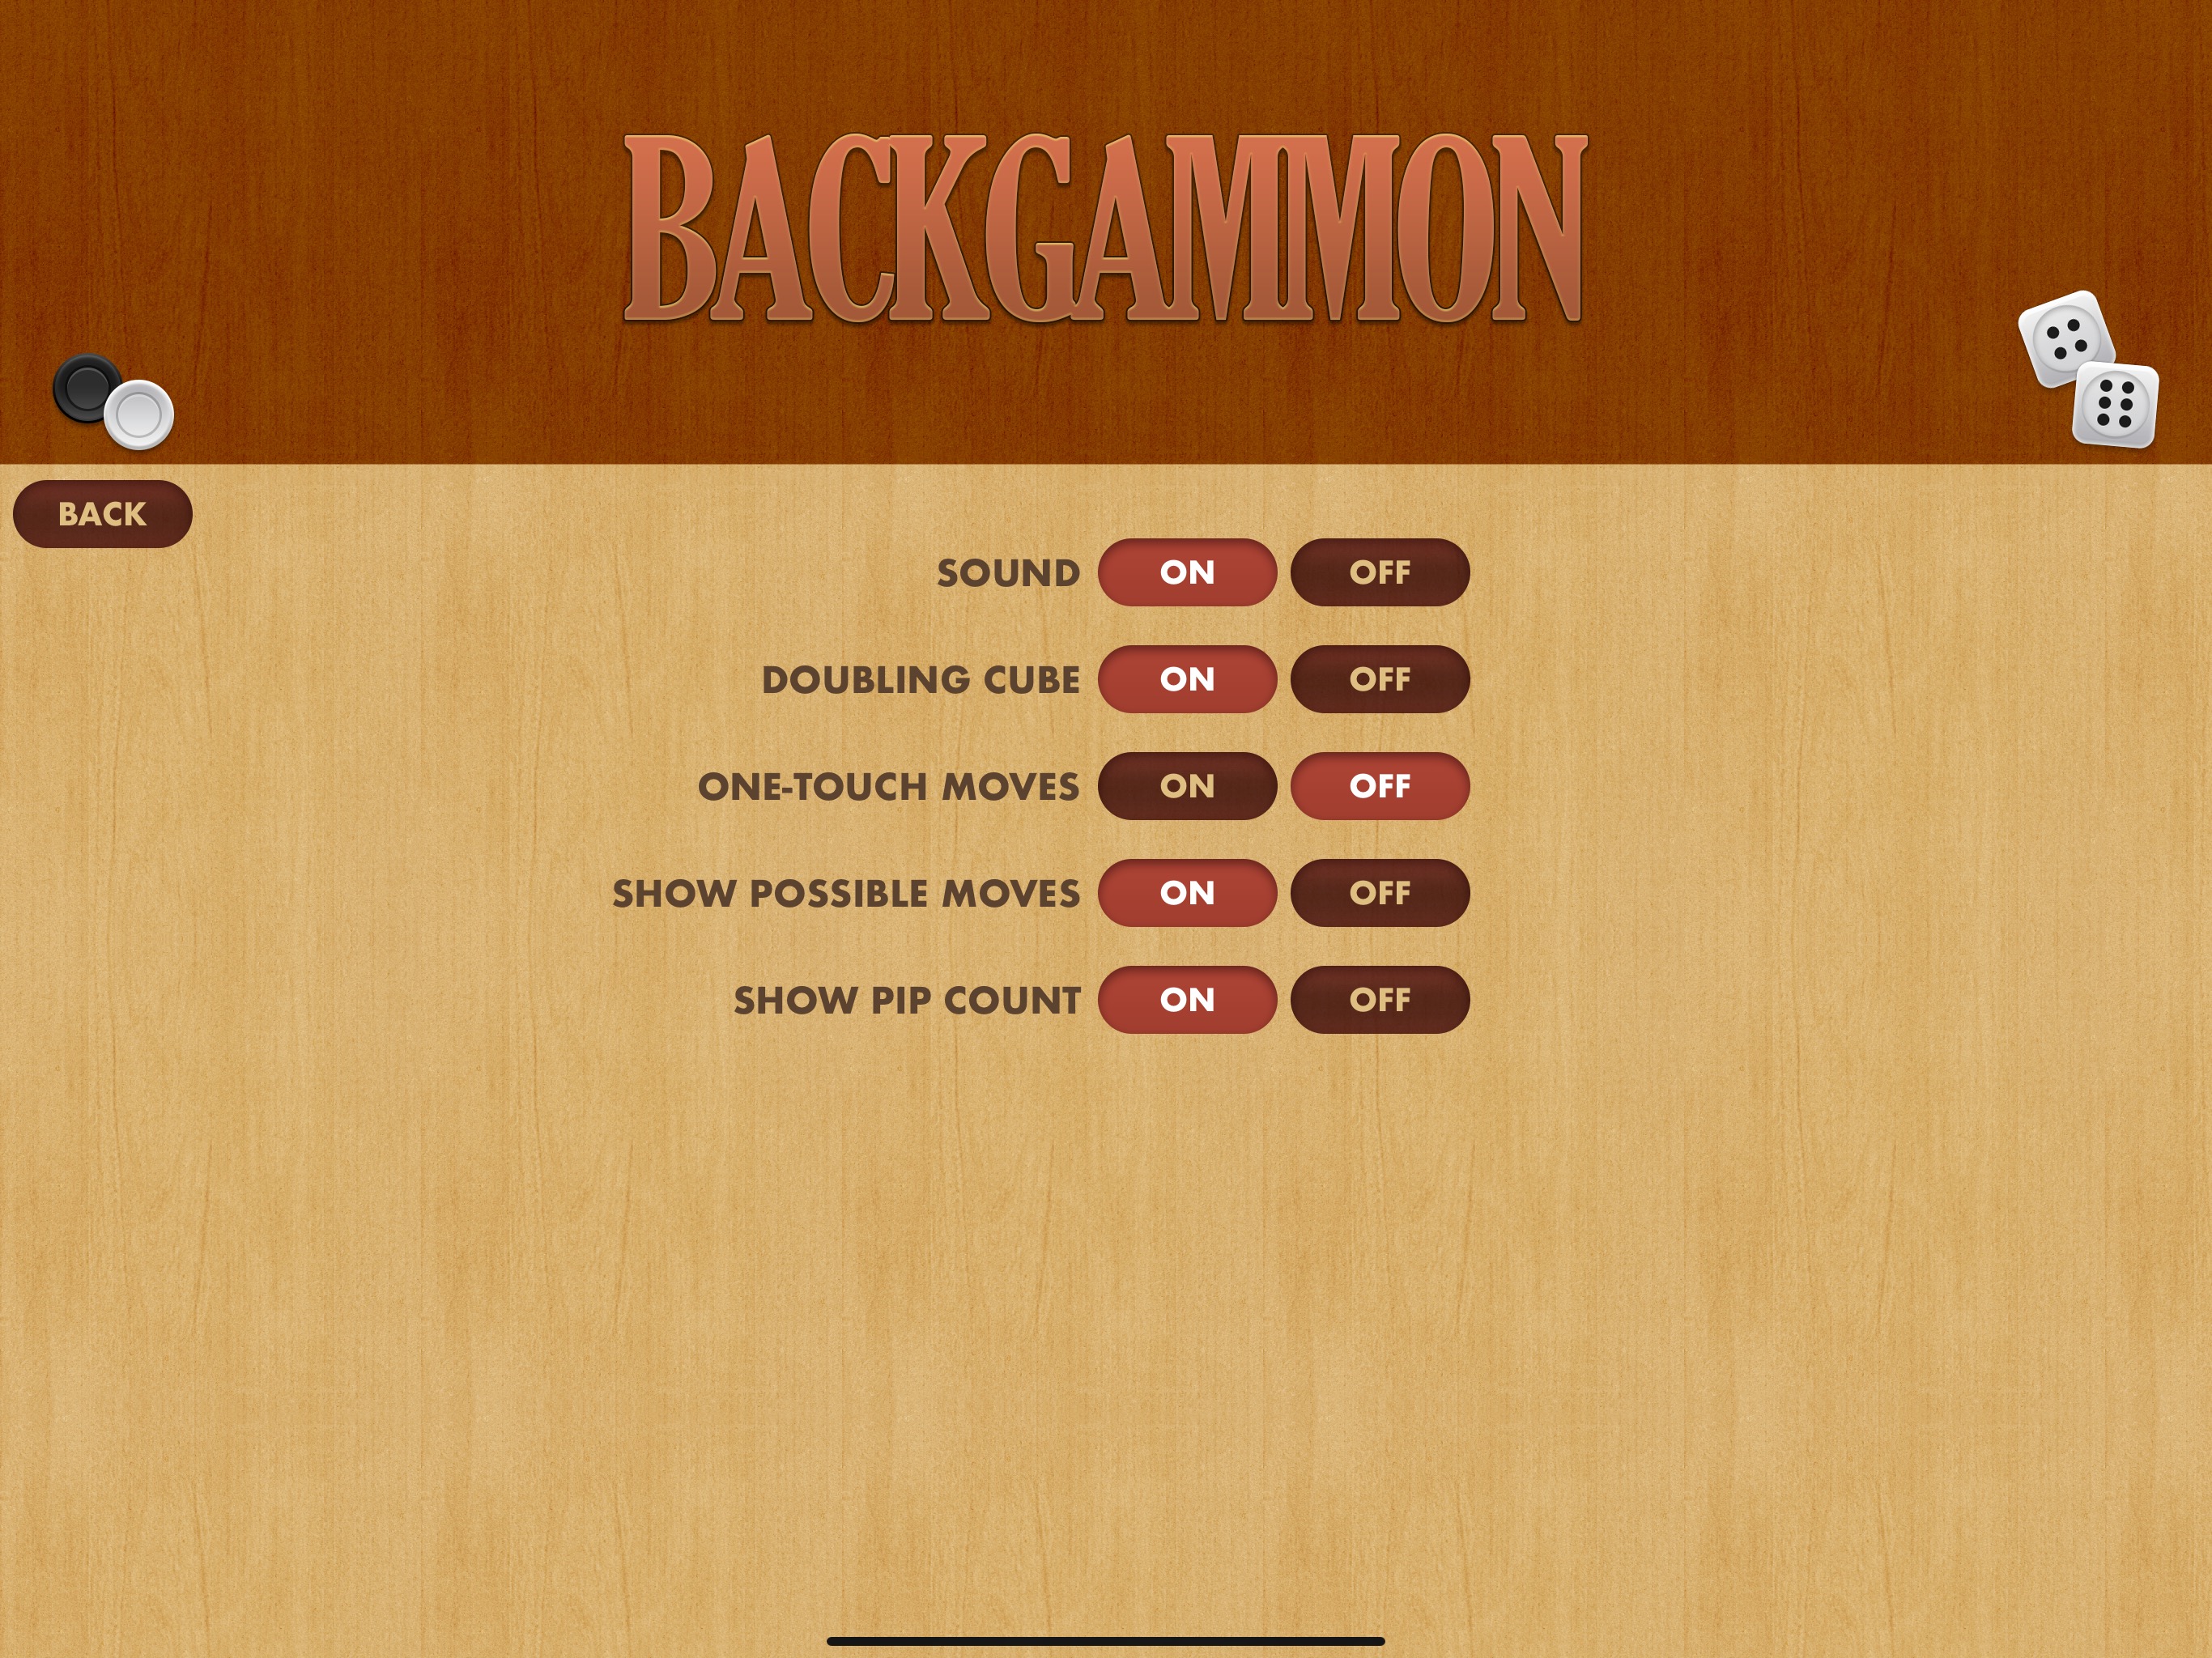 Backgammon Free